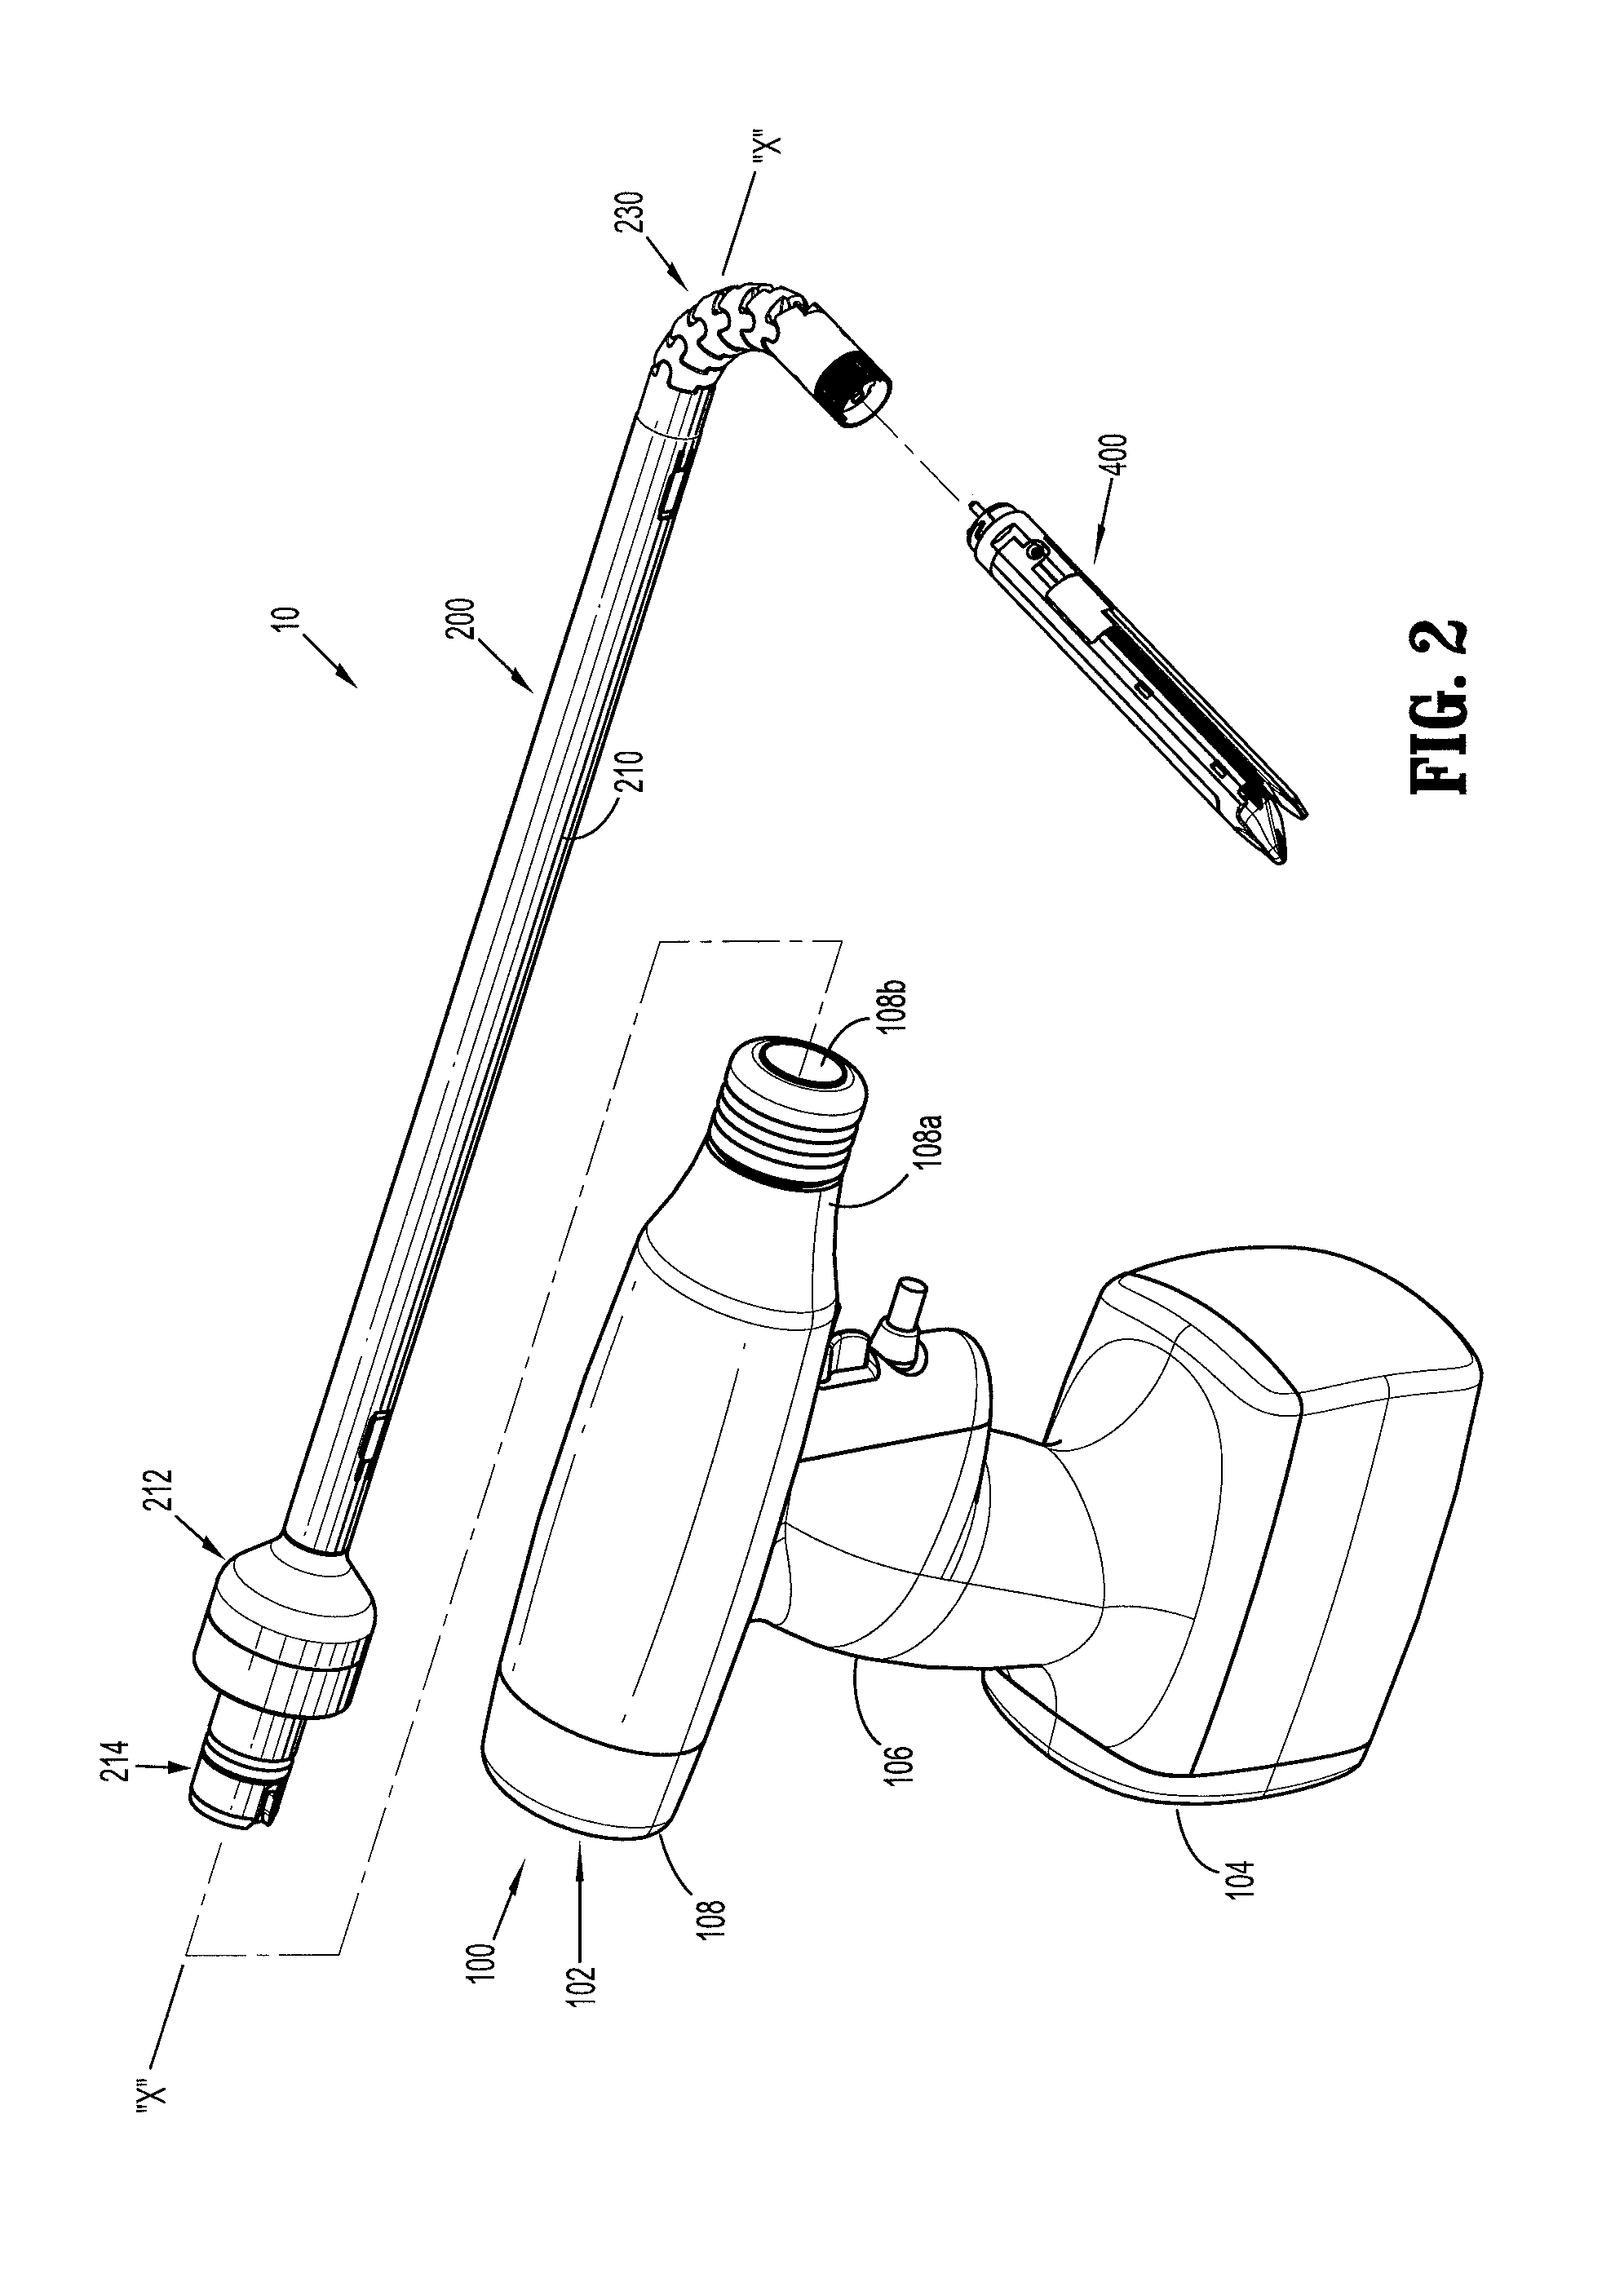 Apparatus for endoscopic procedures